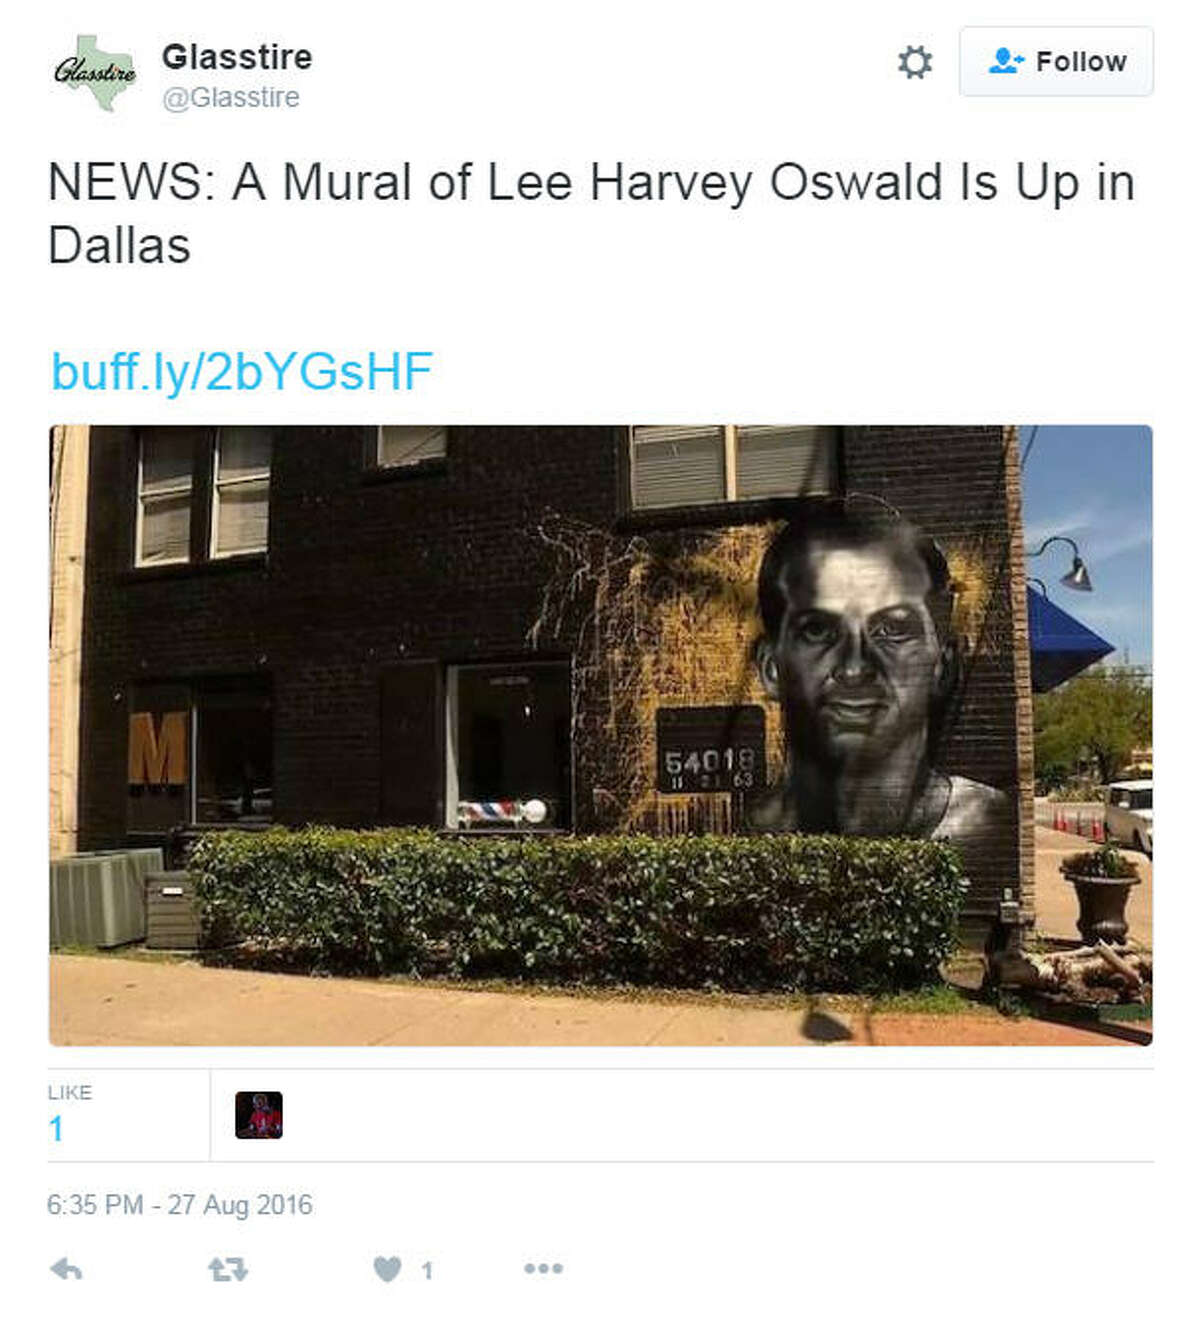 Lee Harvey Oswald mural in Dallas raises eyebrows